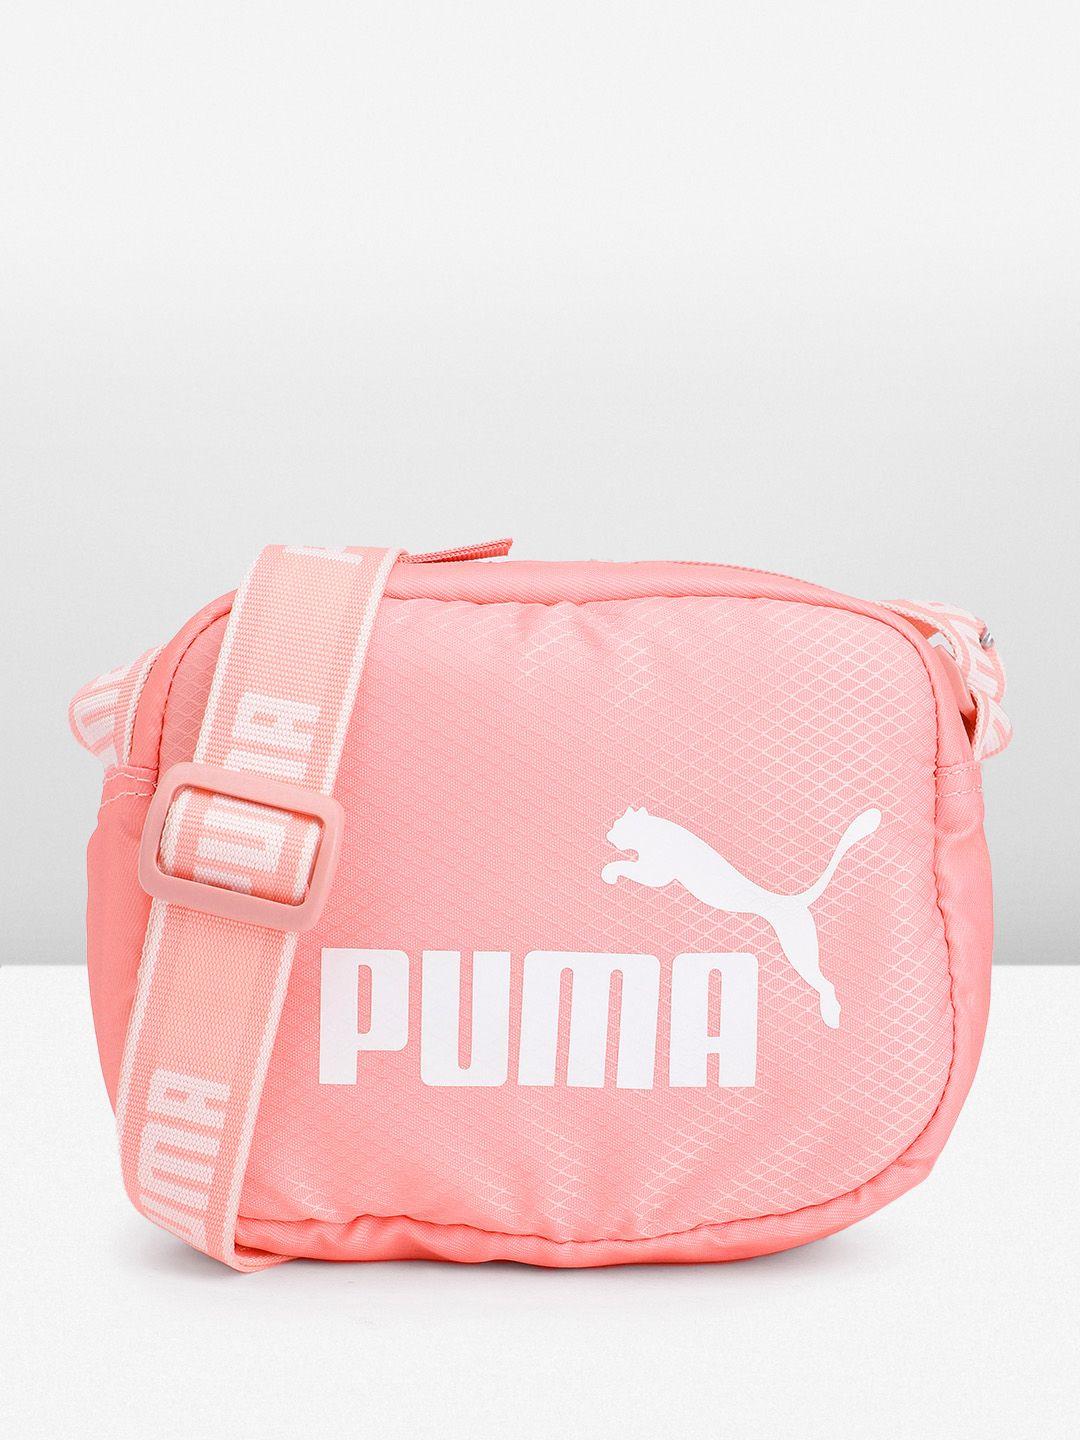 puma brand logo printed structured crossbody sling bag